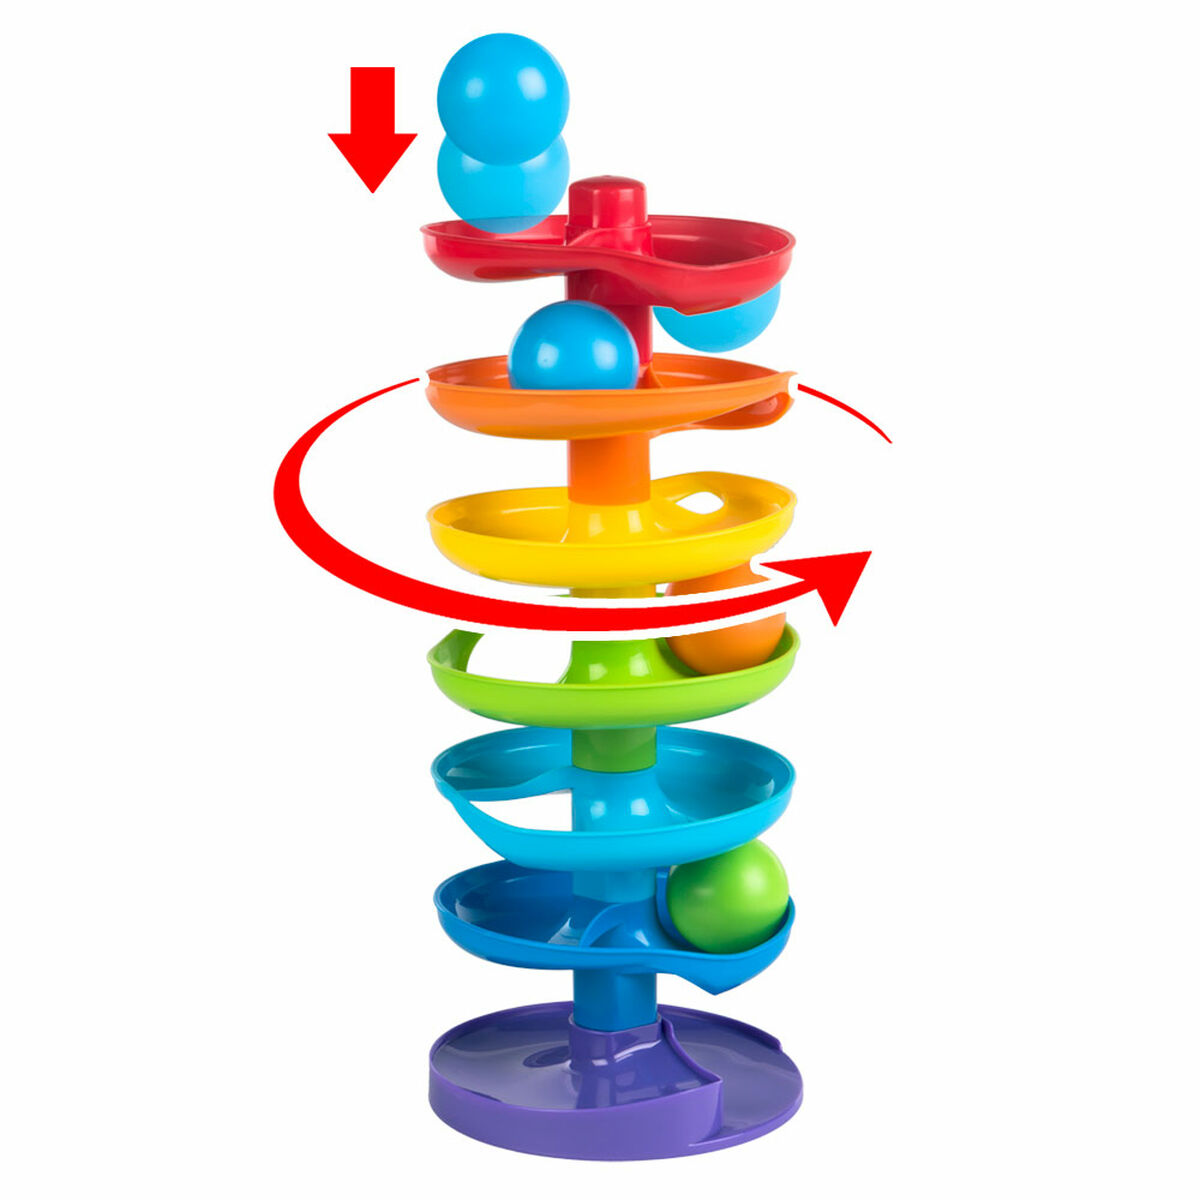 Activity Spiral PlayGo Rainbow 15 x 37 x 15,5 cm 4 Units